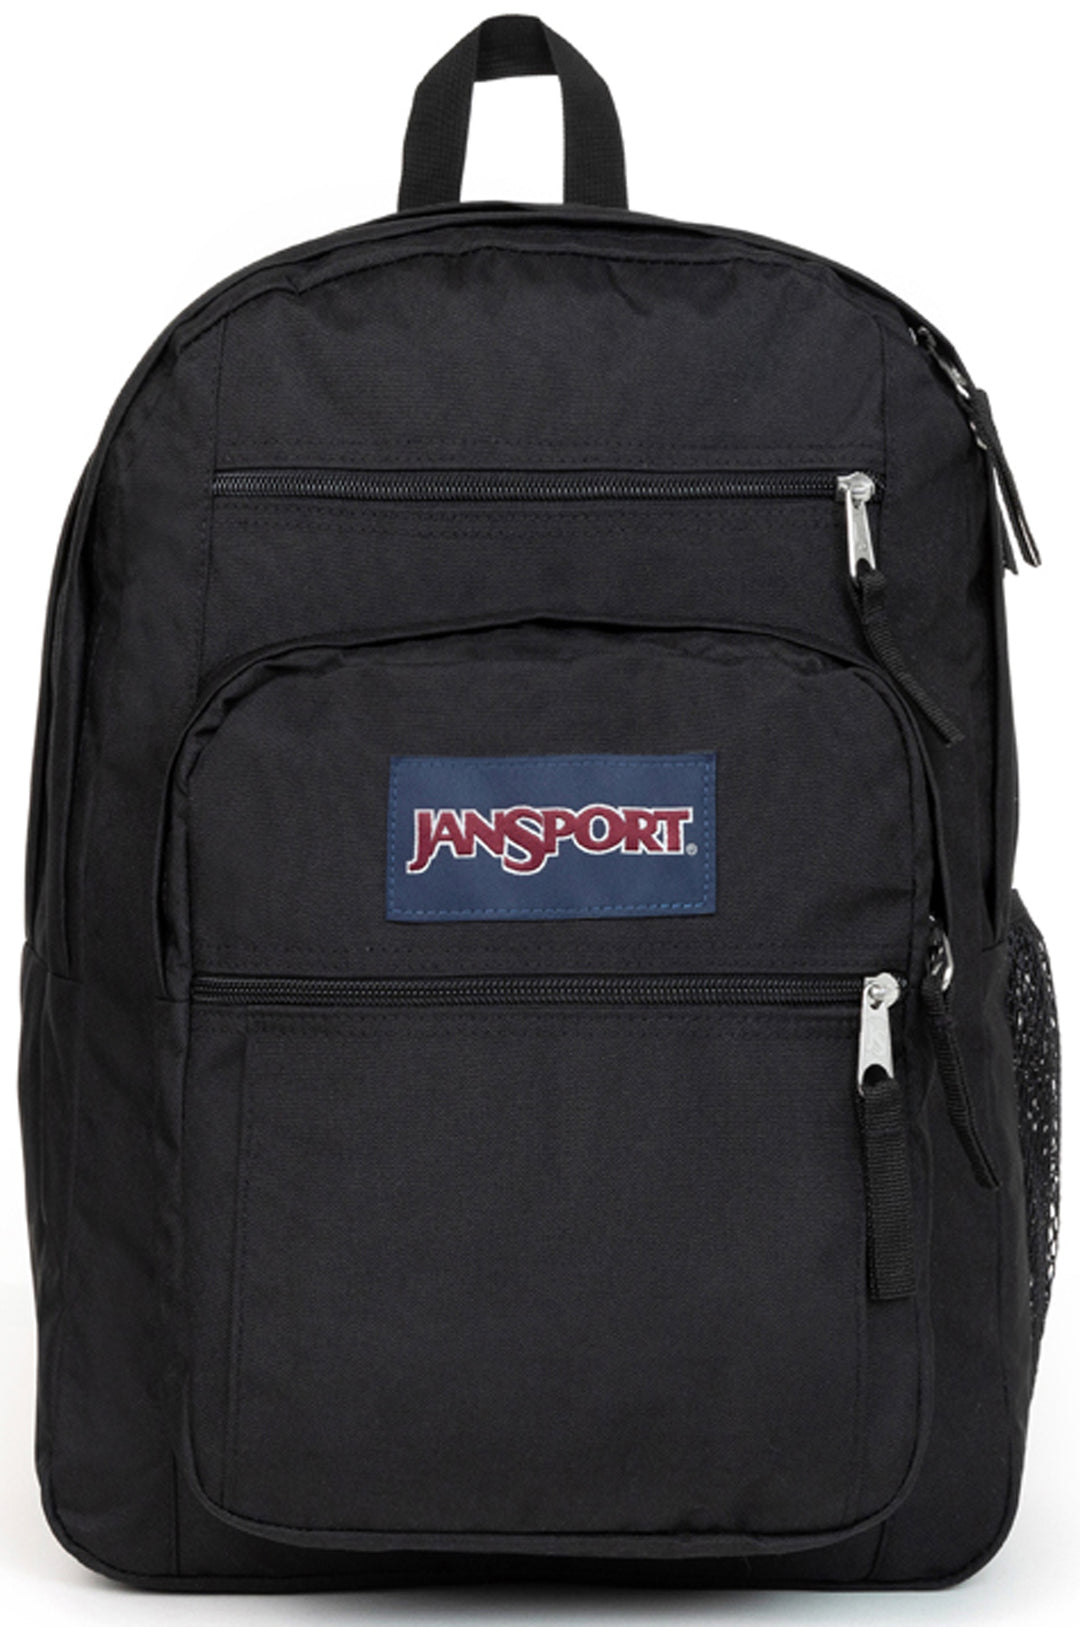 Jansport Big Black Backpack 4feetshoes In – Student